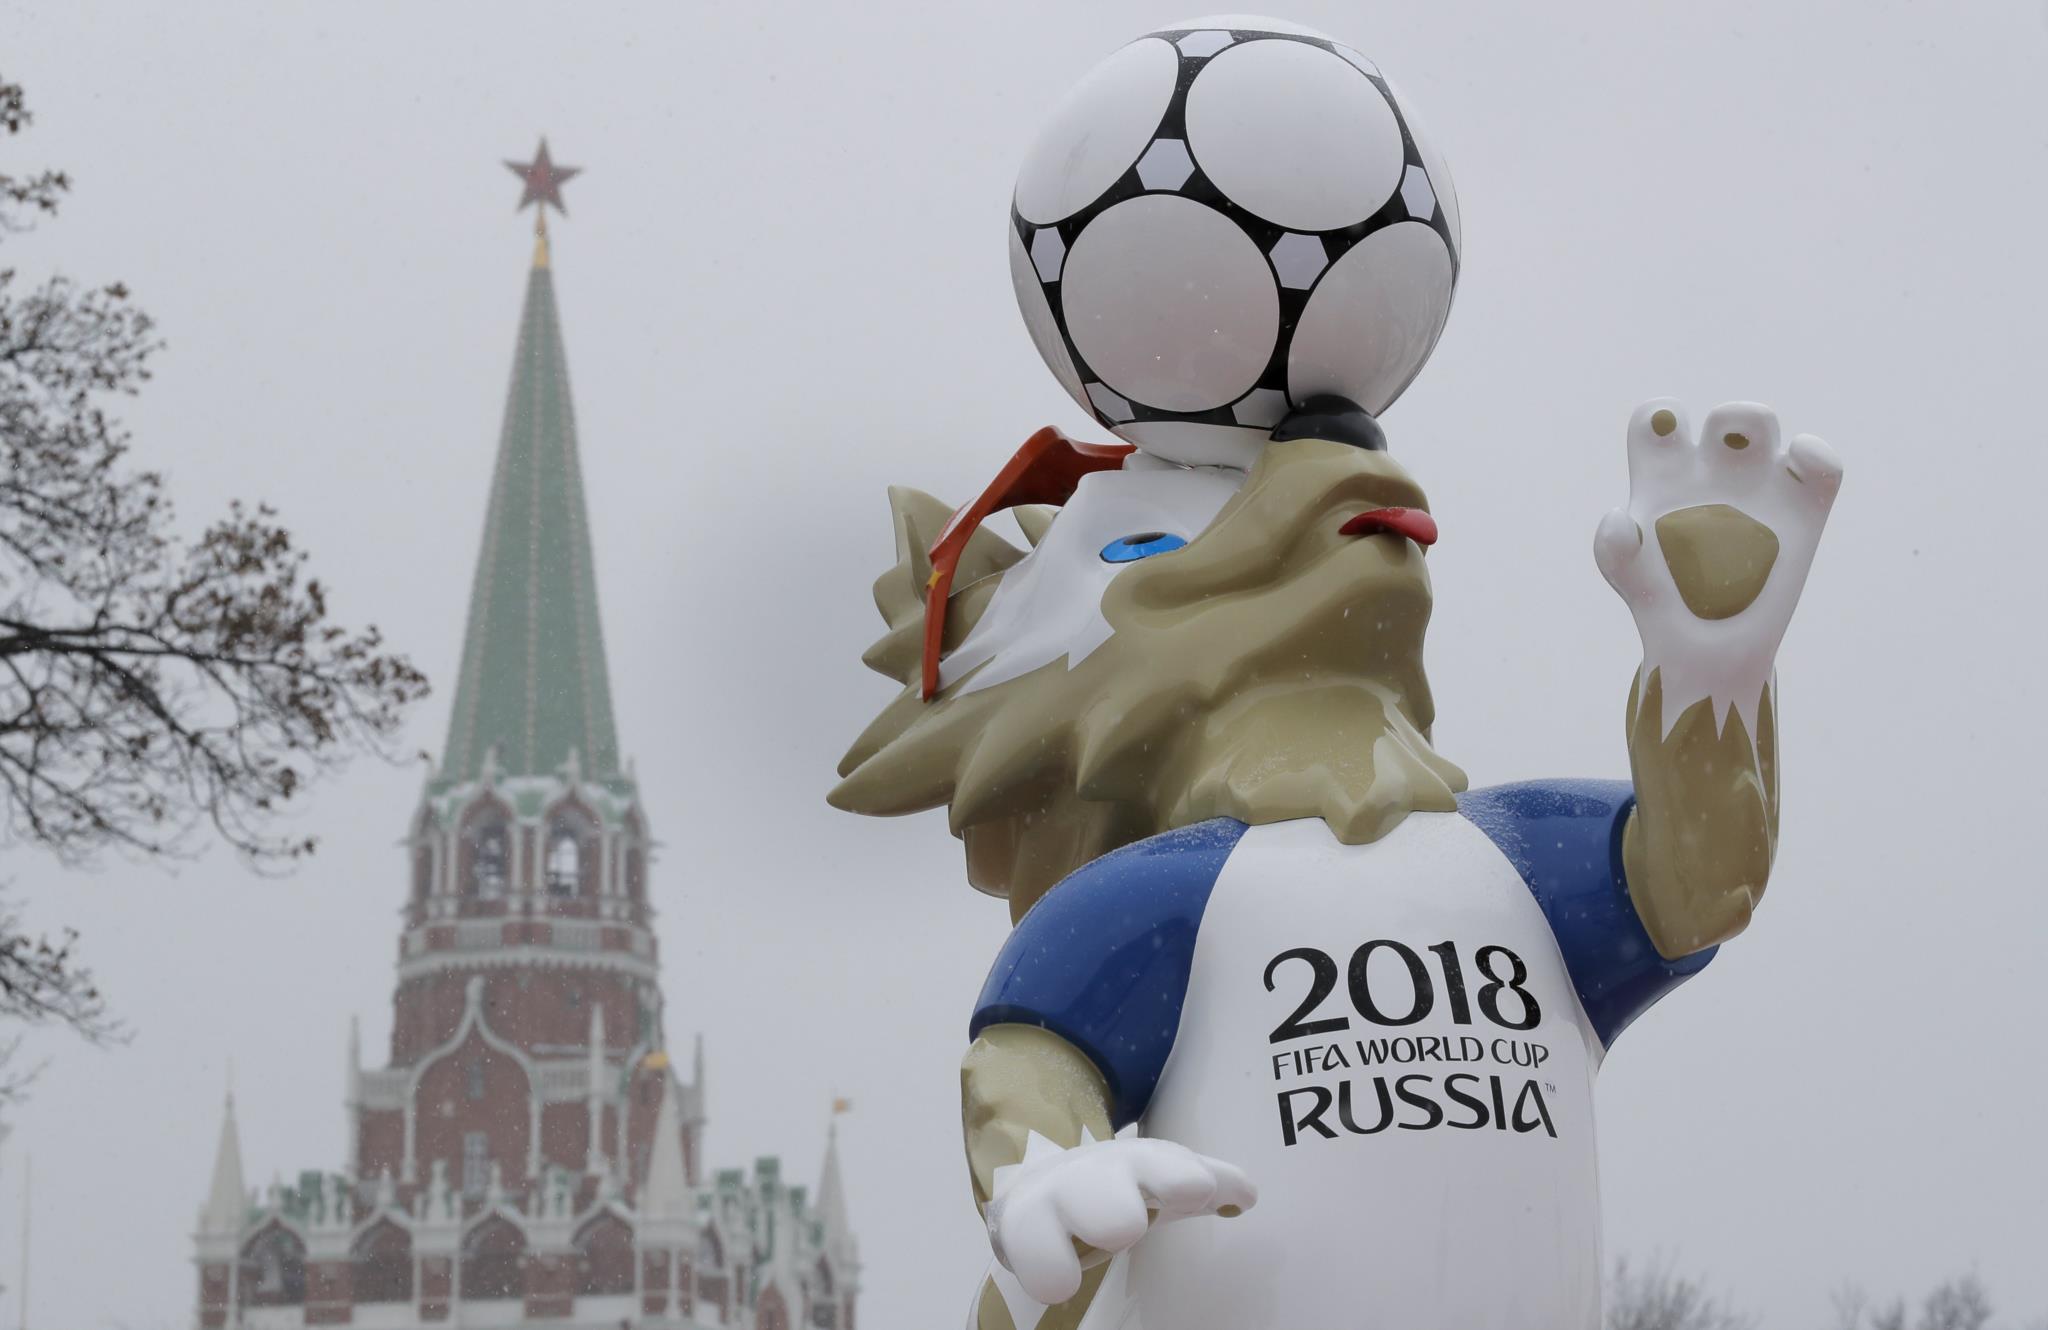 World cup russia. ЧМ 2018 Москва. ФИФА 2018 Москва.